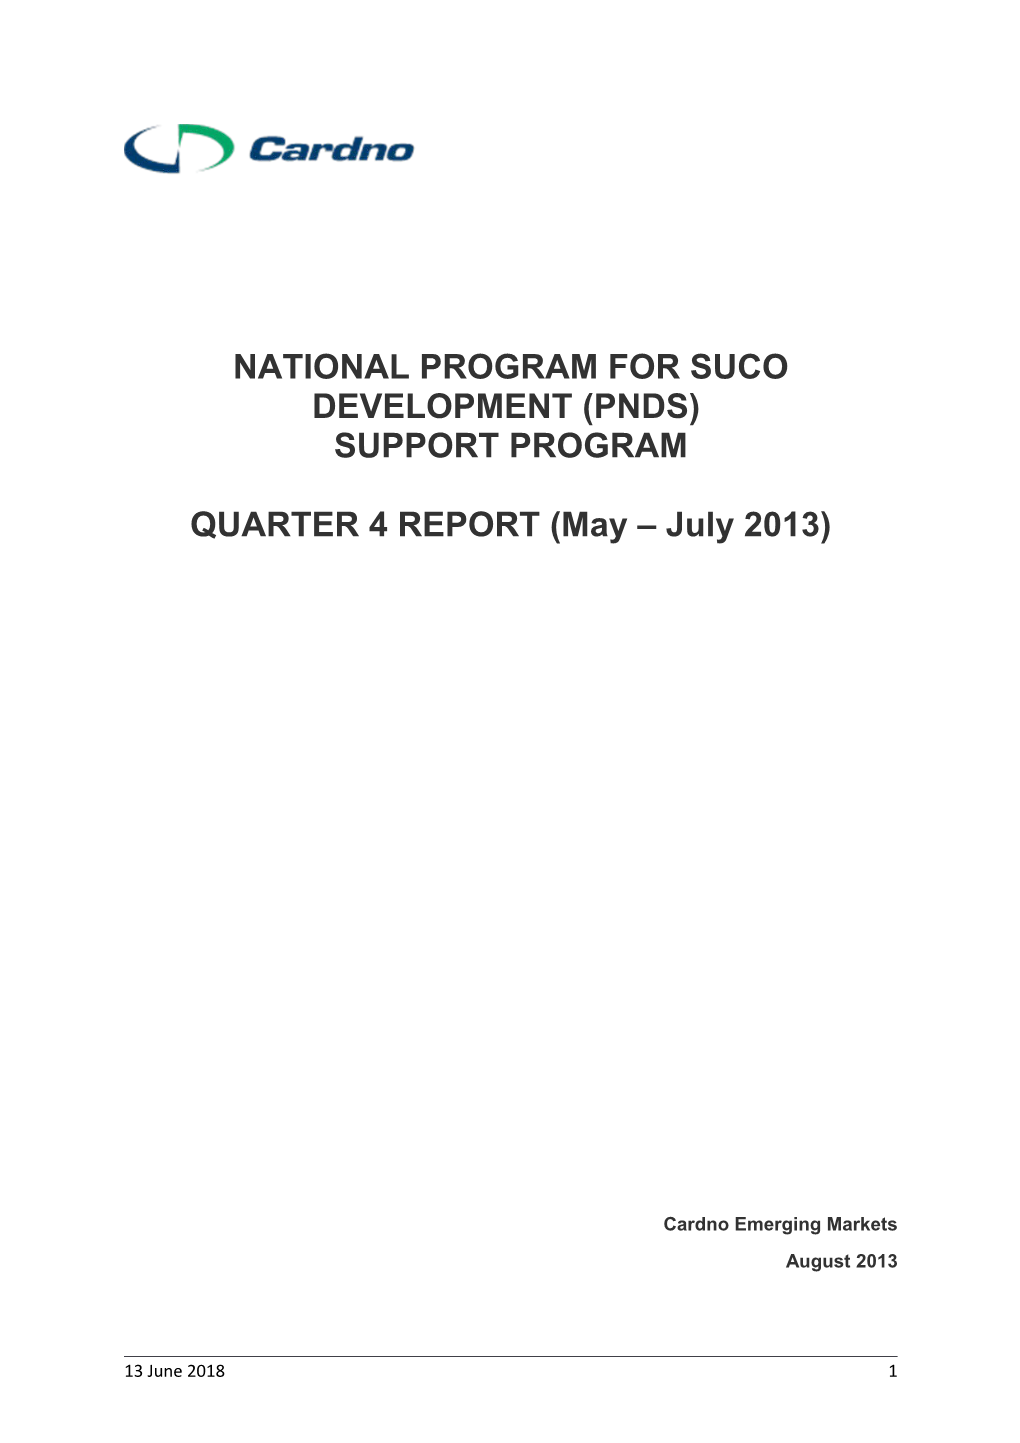 National Program for Suco Development (Pnds)